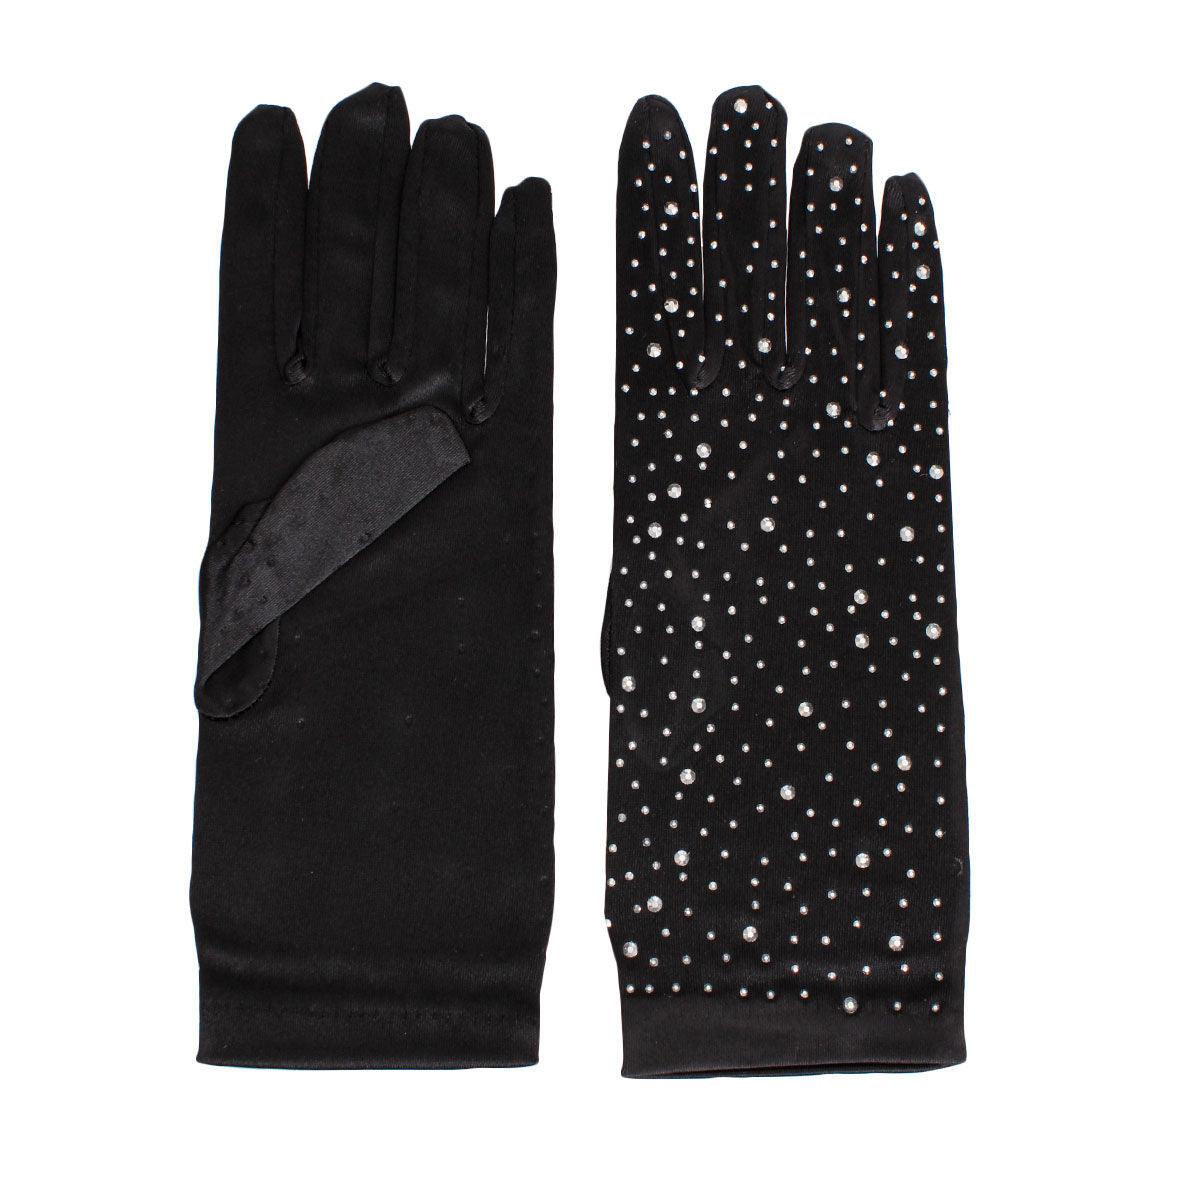 Make a Bold Statement: Black Rhinestone Gloves for Ultimate Elegance